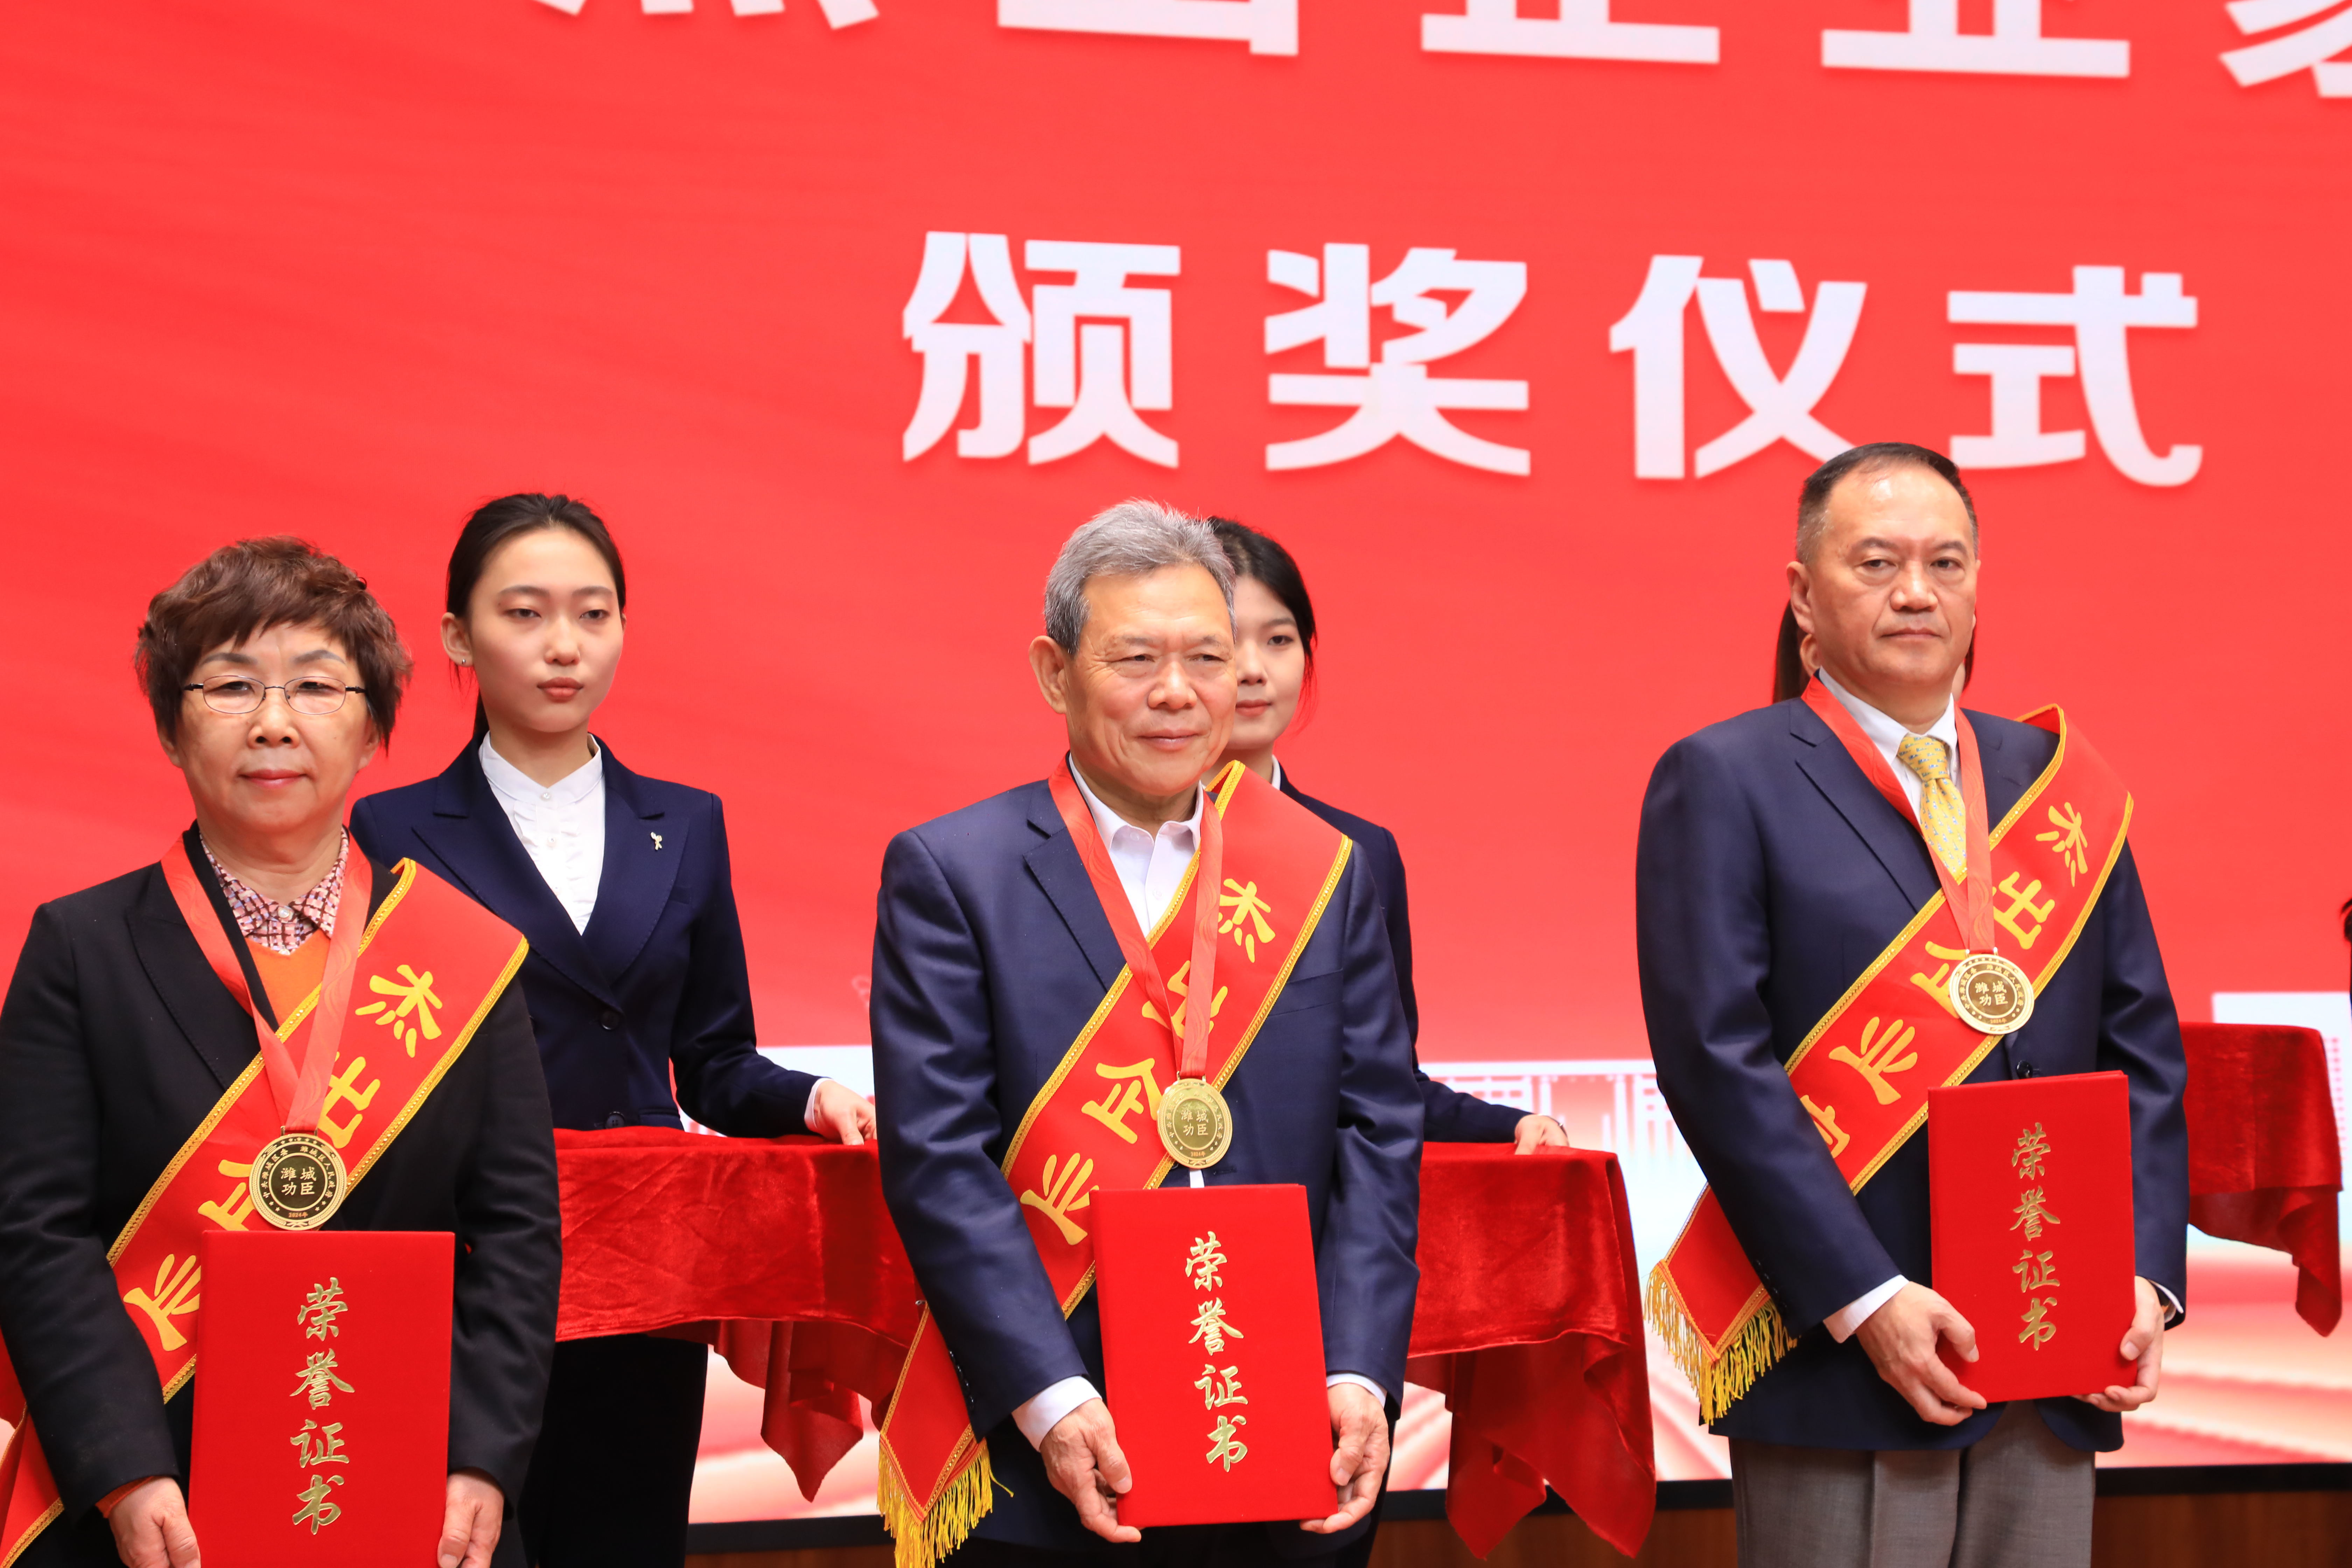 Xi Bao: Ruifu sesame Oil Co., Ltd. was awarded the honorary title of 